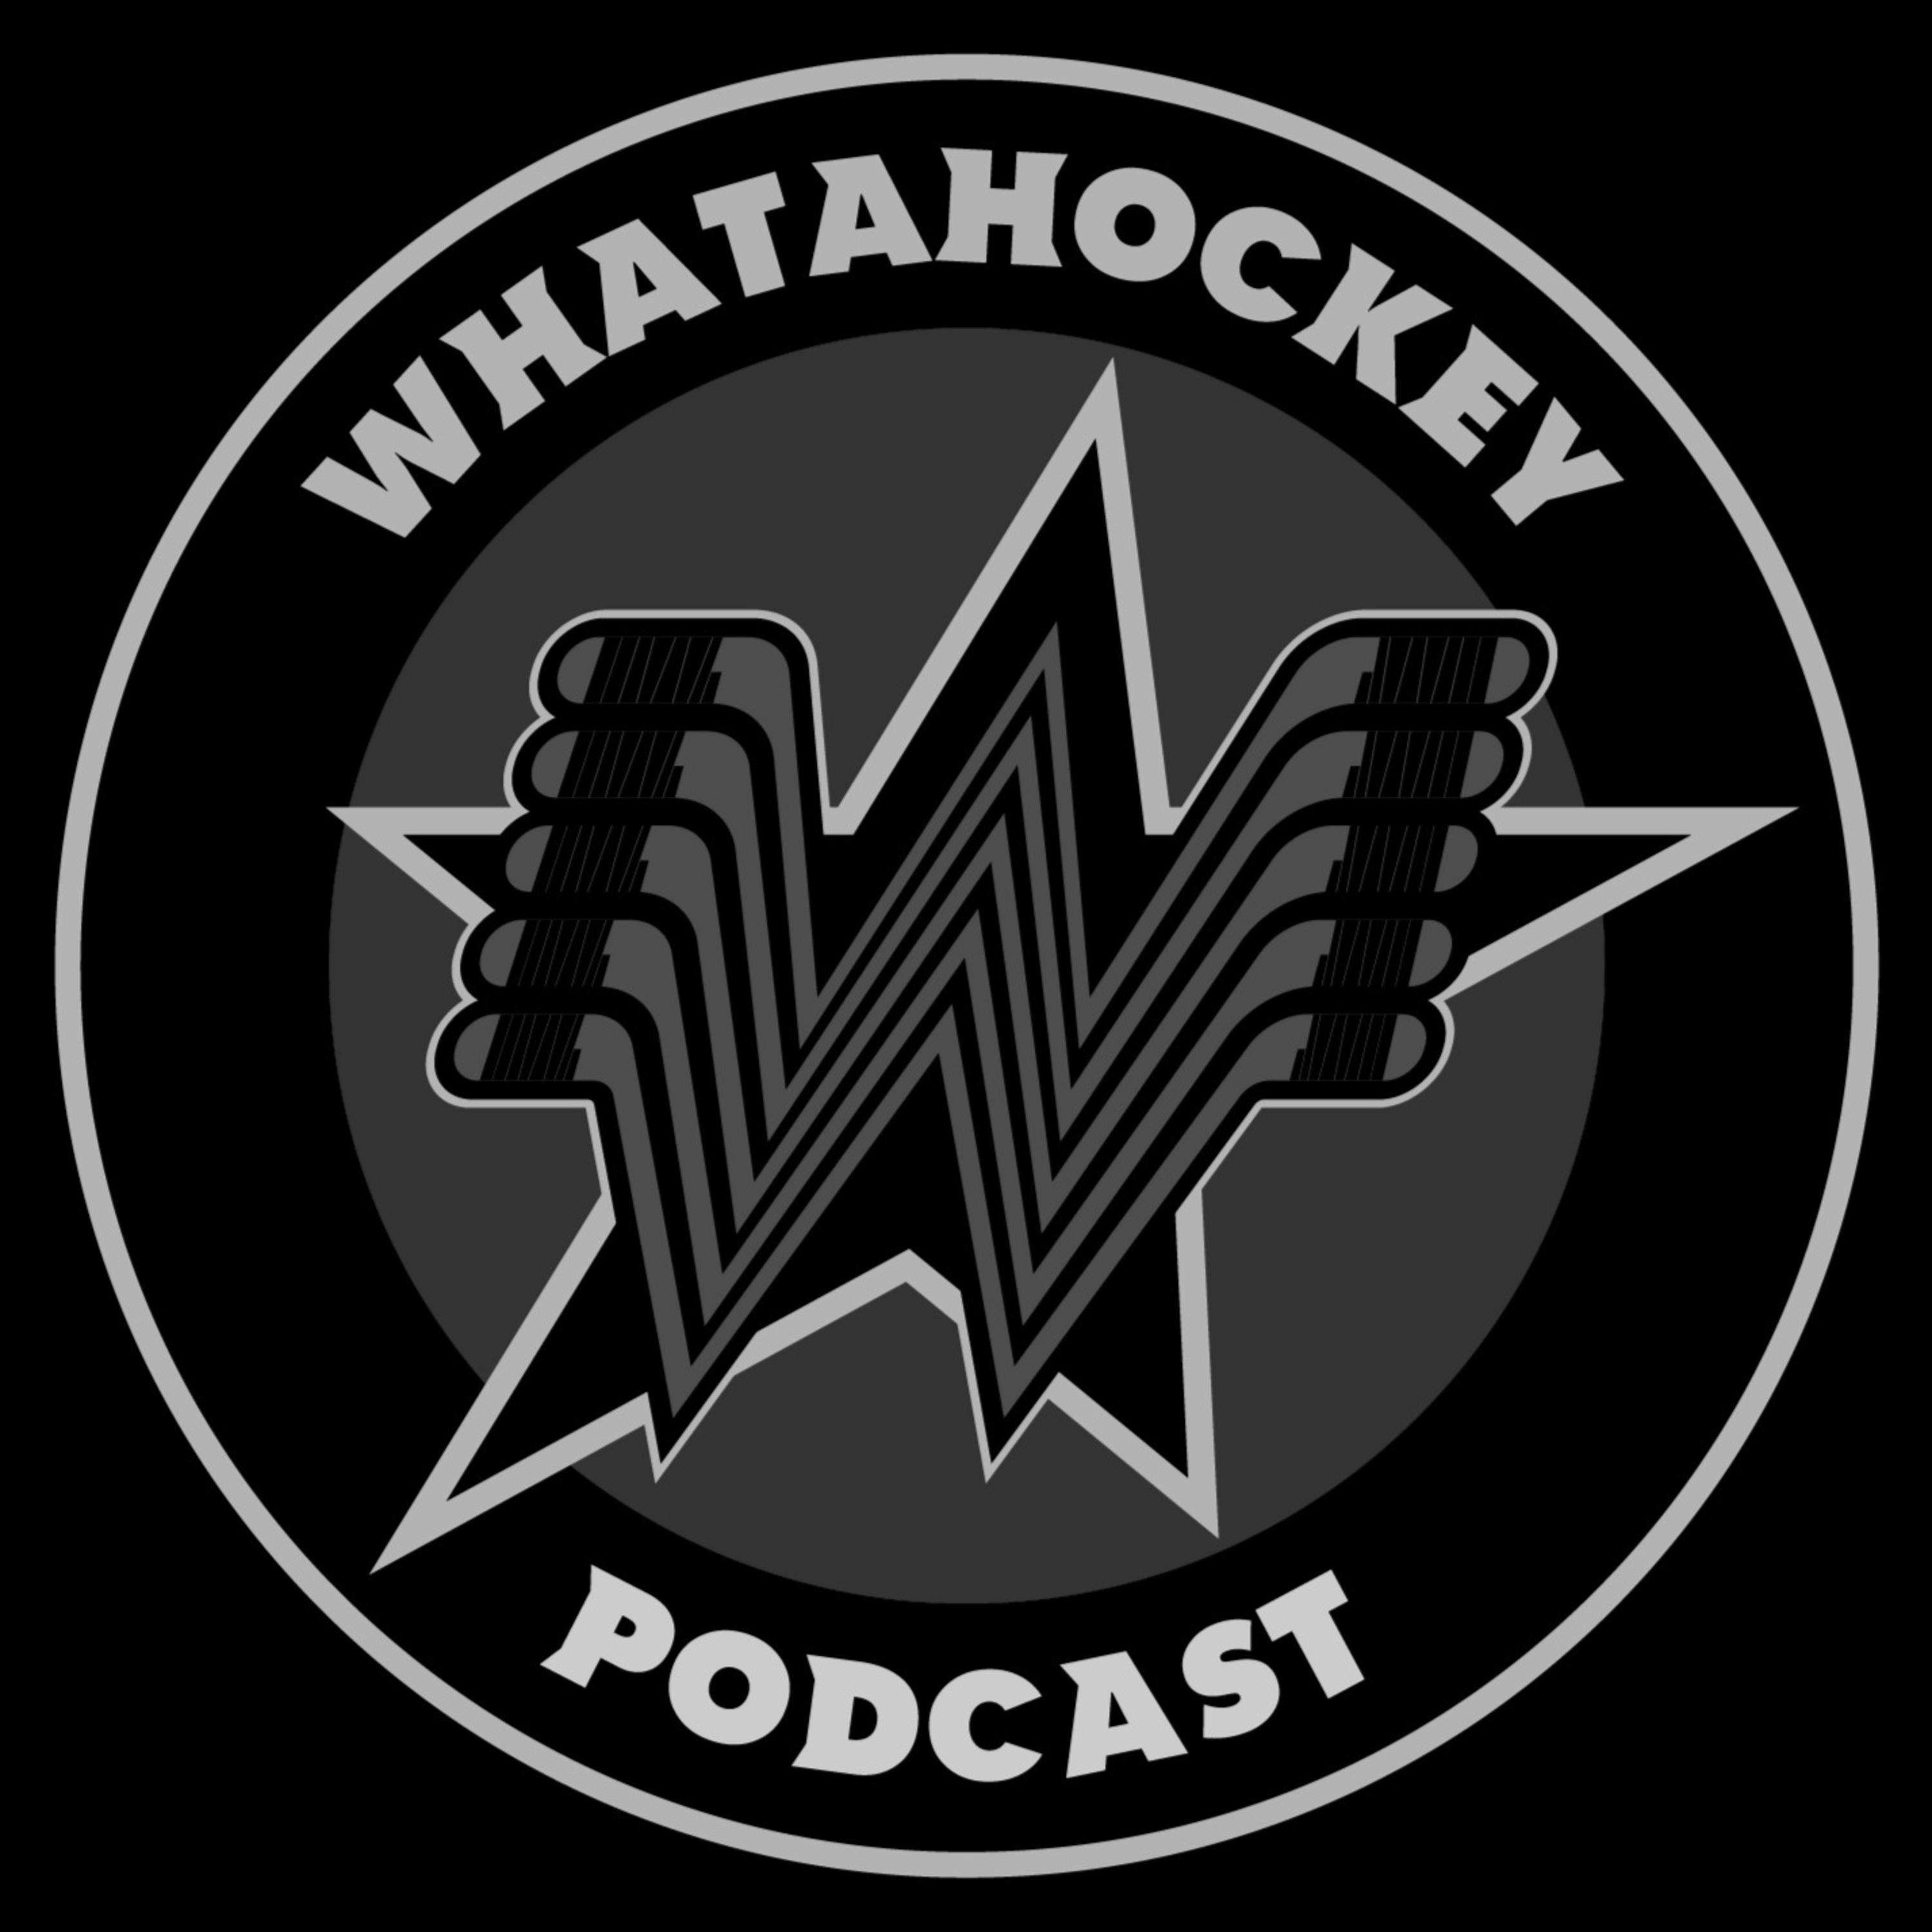 Whatahockey Podcast: Episode 128-